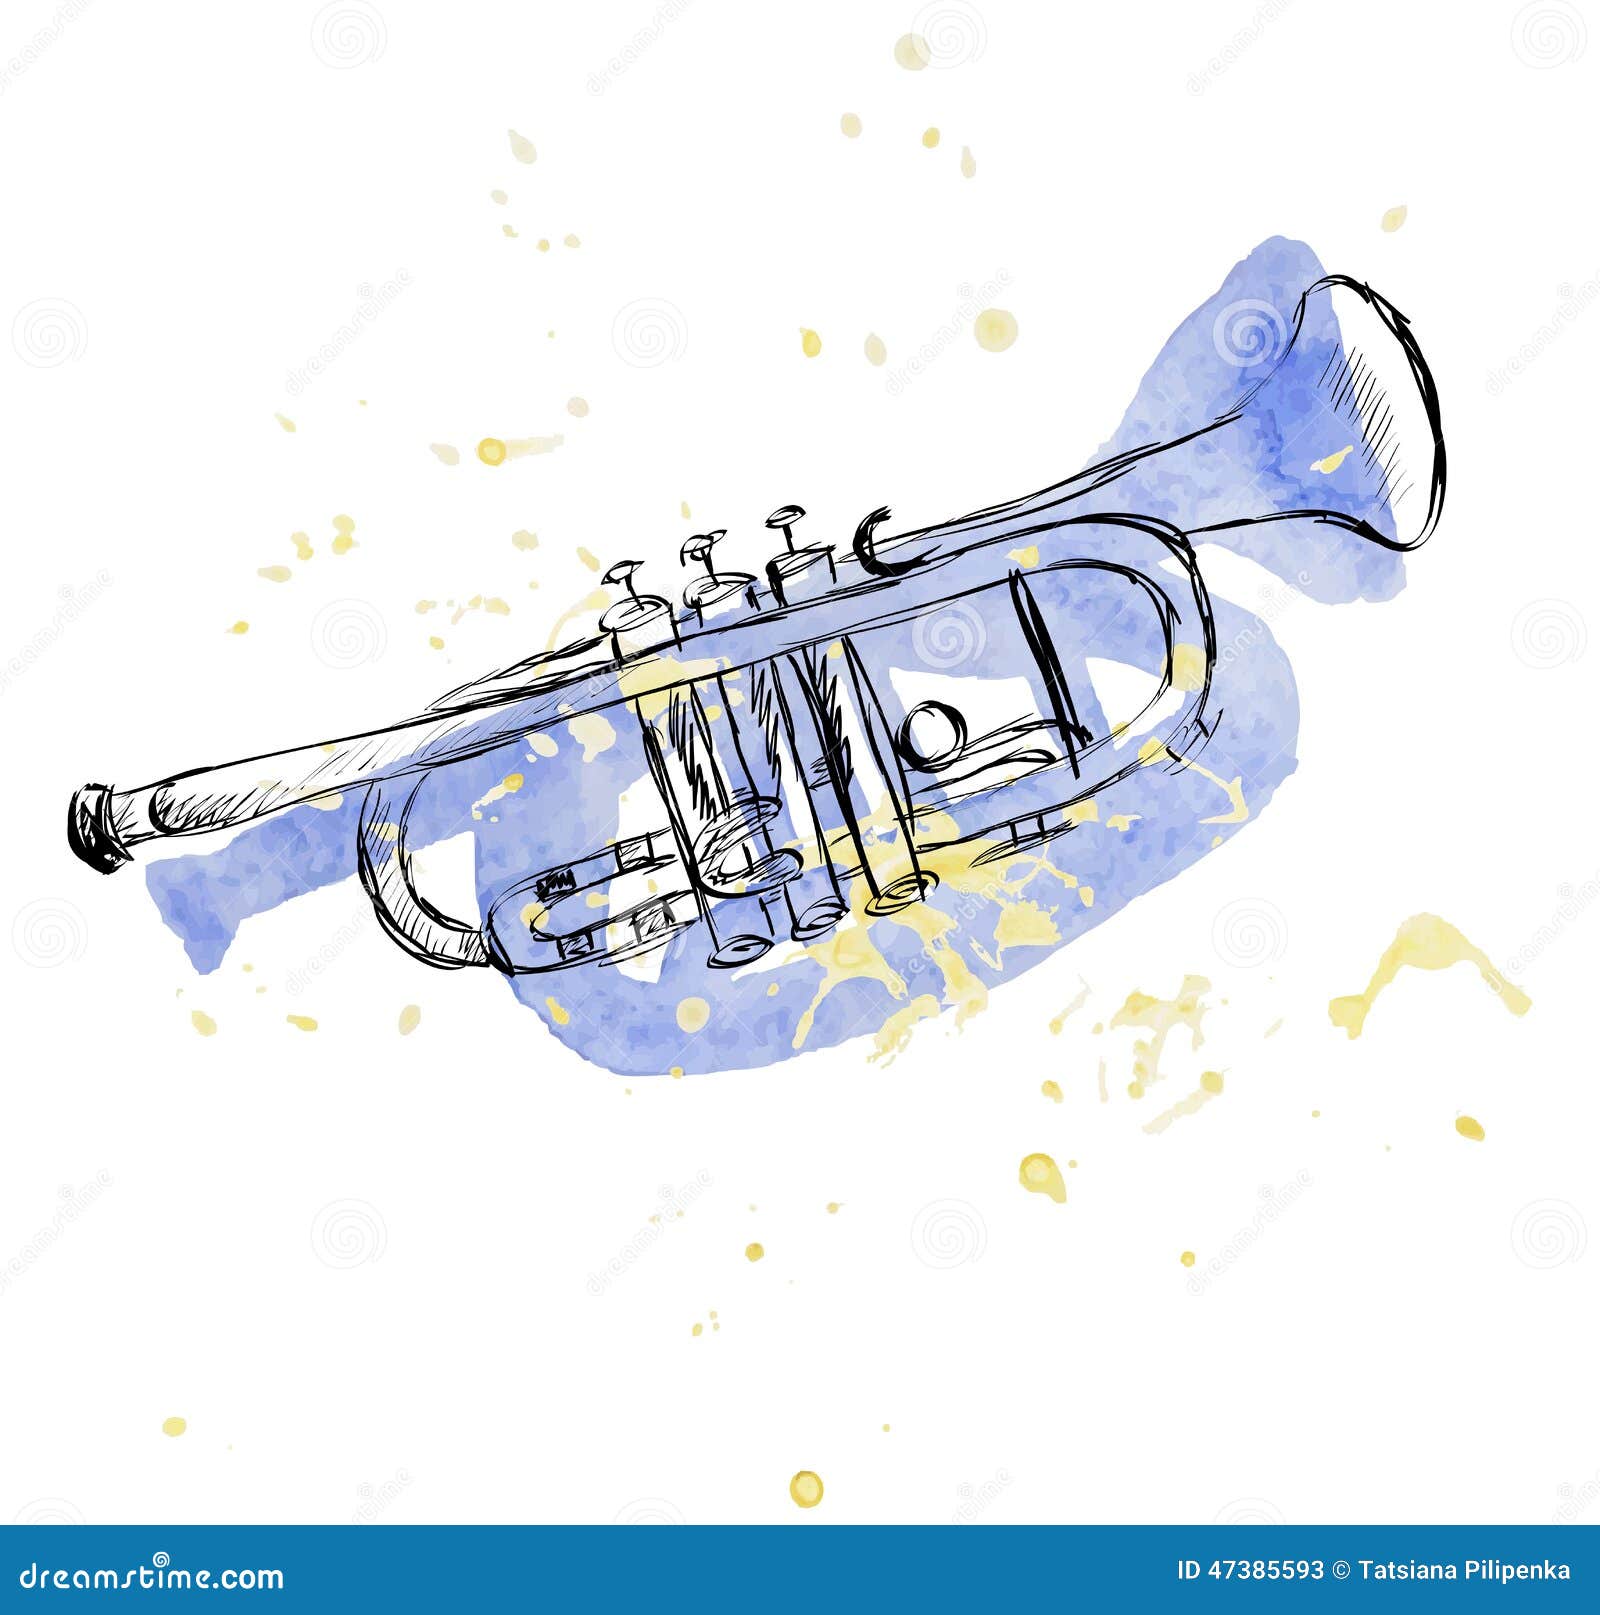 Trumpet stock vector. Illustration of grunge, background - 47385593